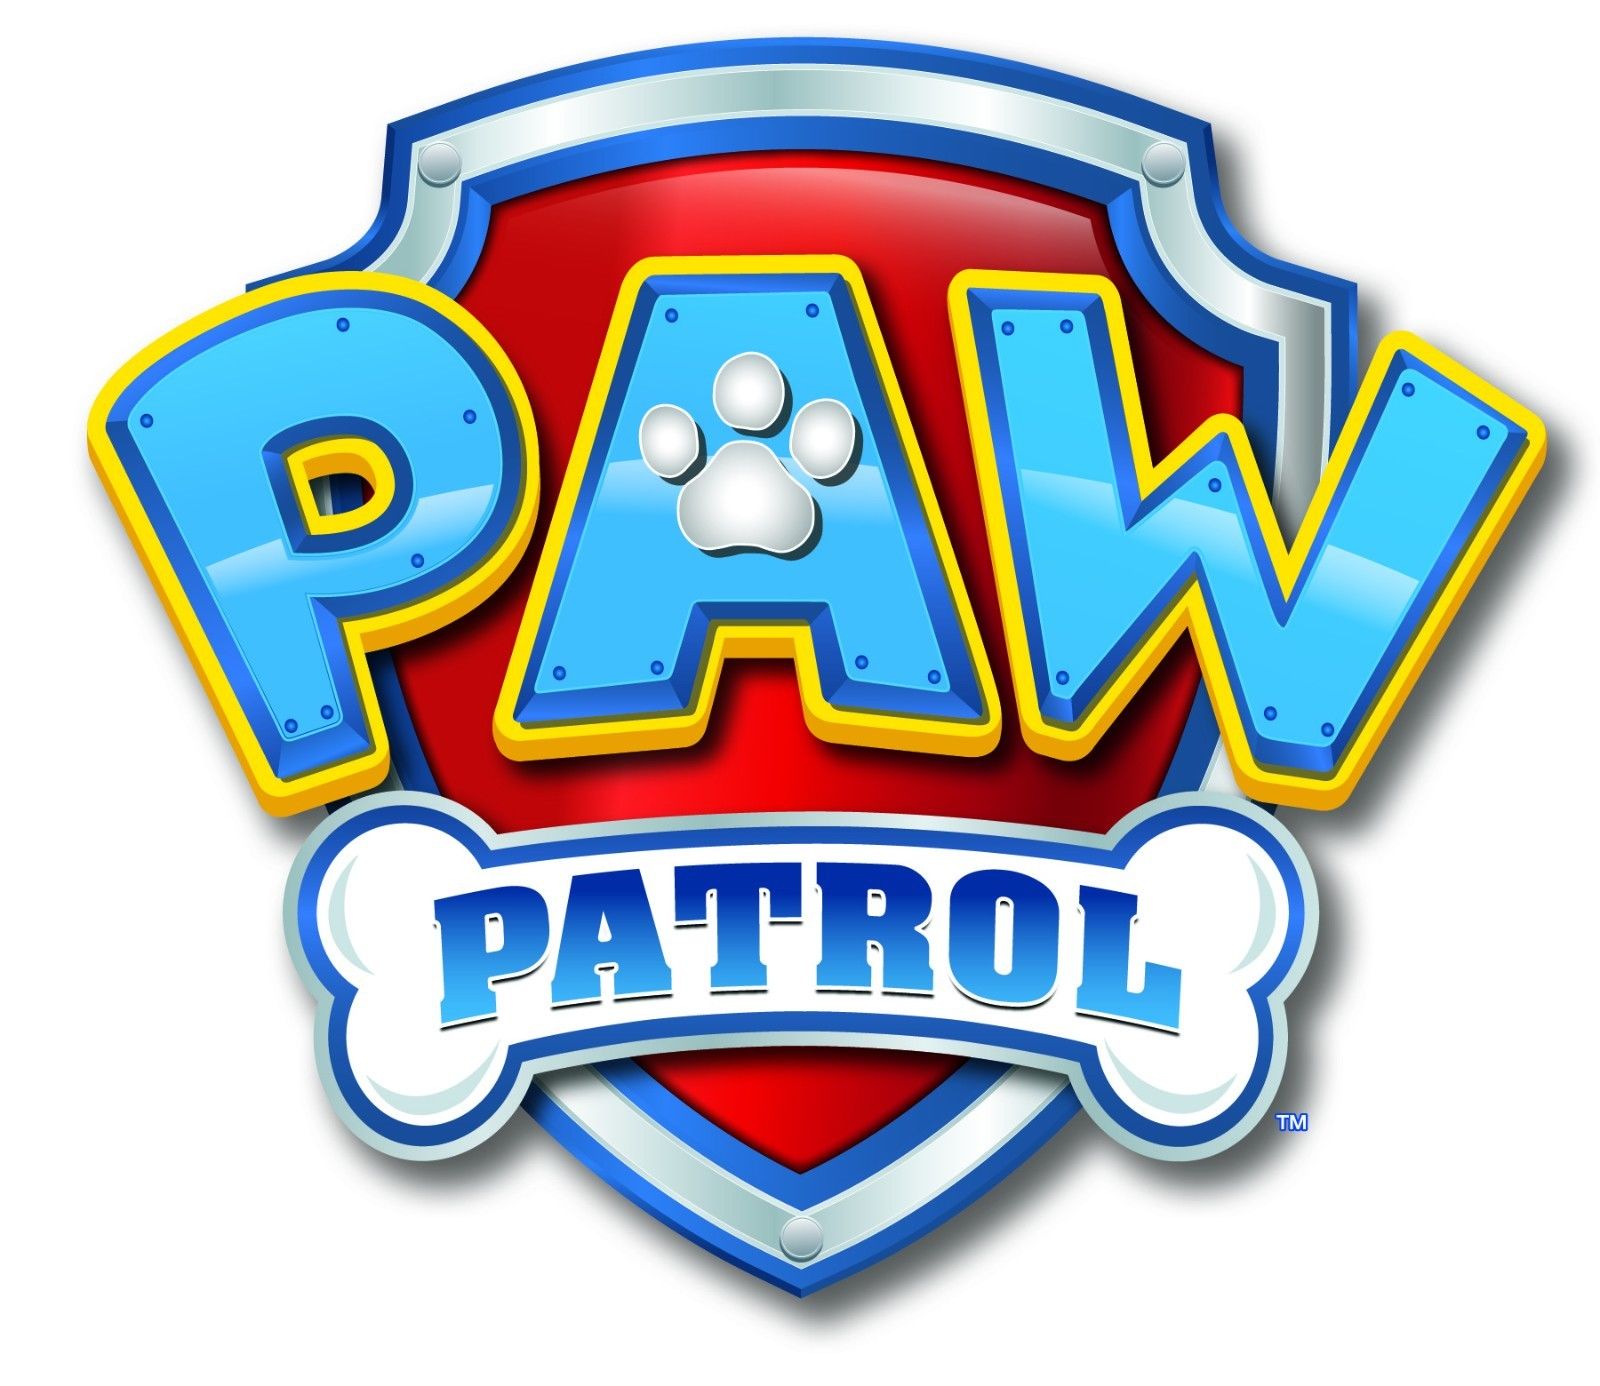 Paw patrol shield clipart